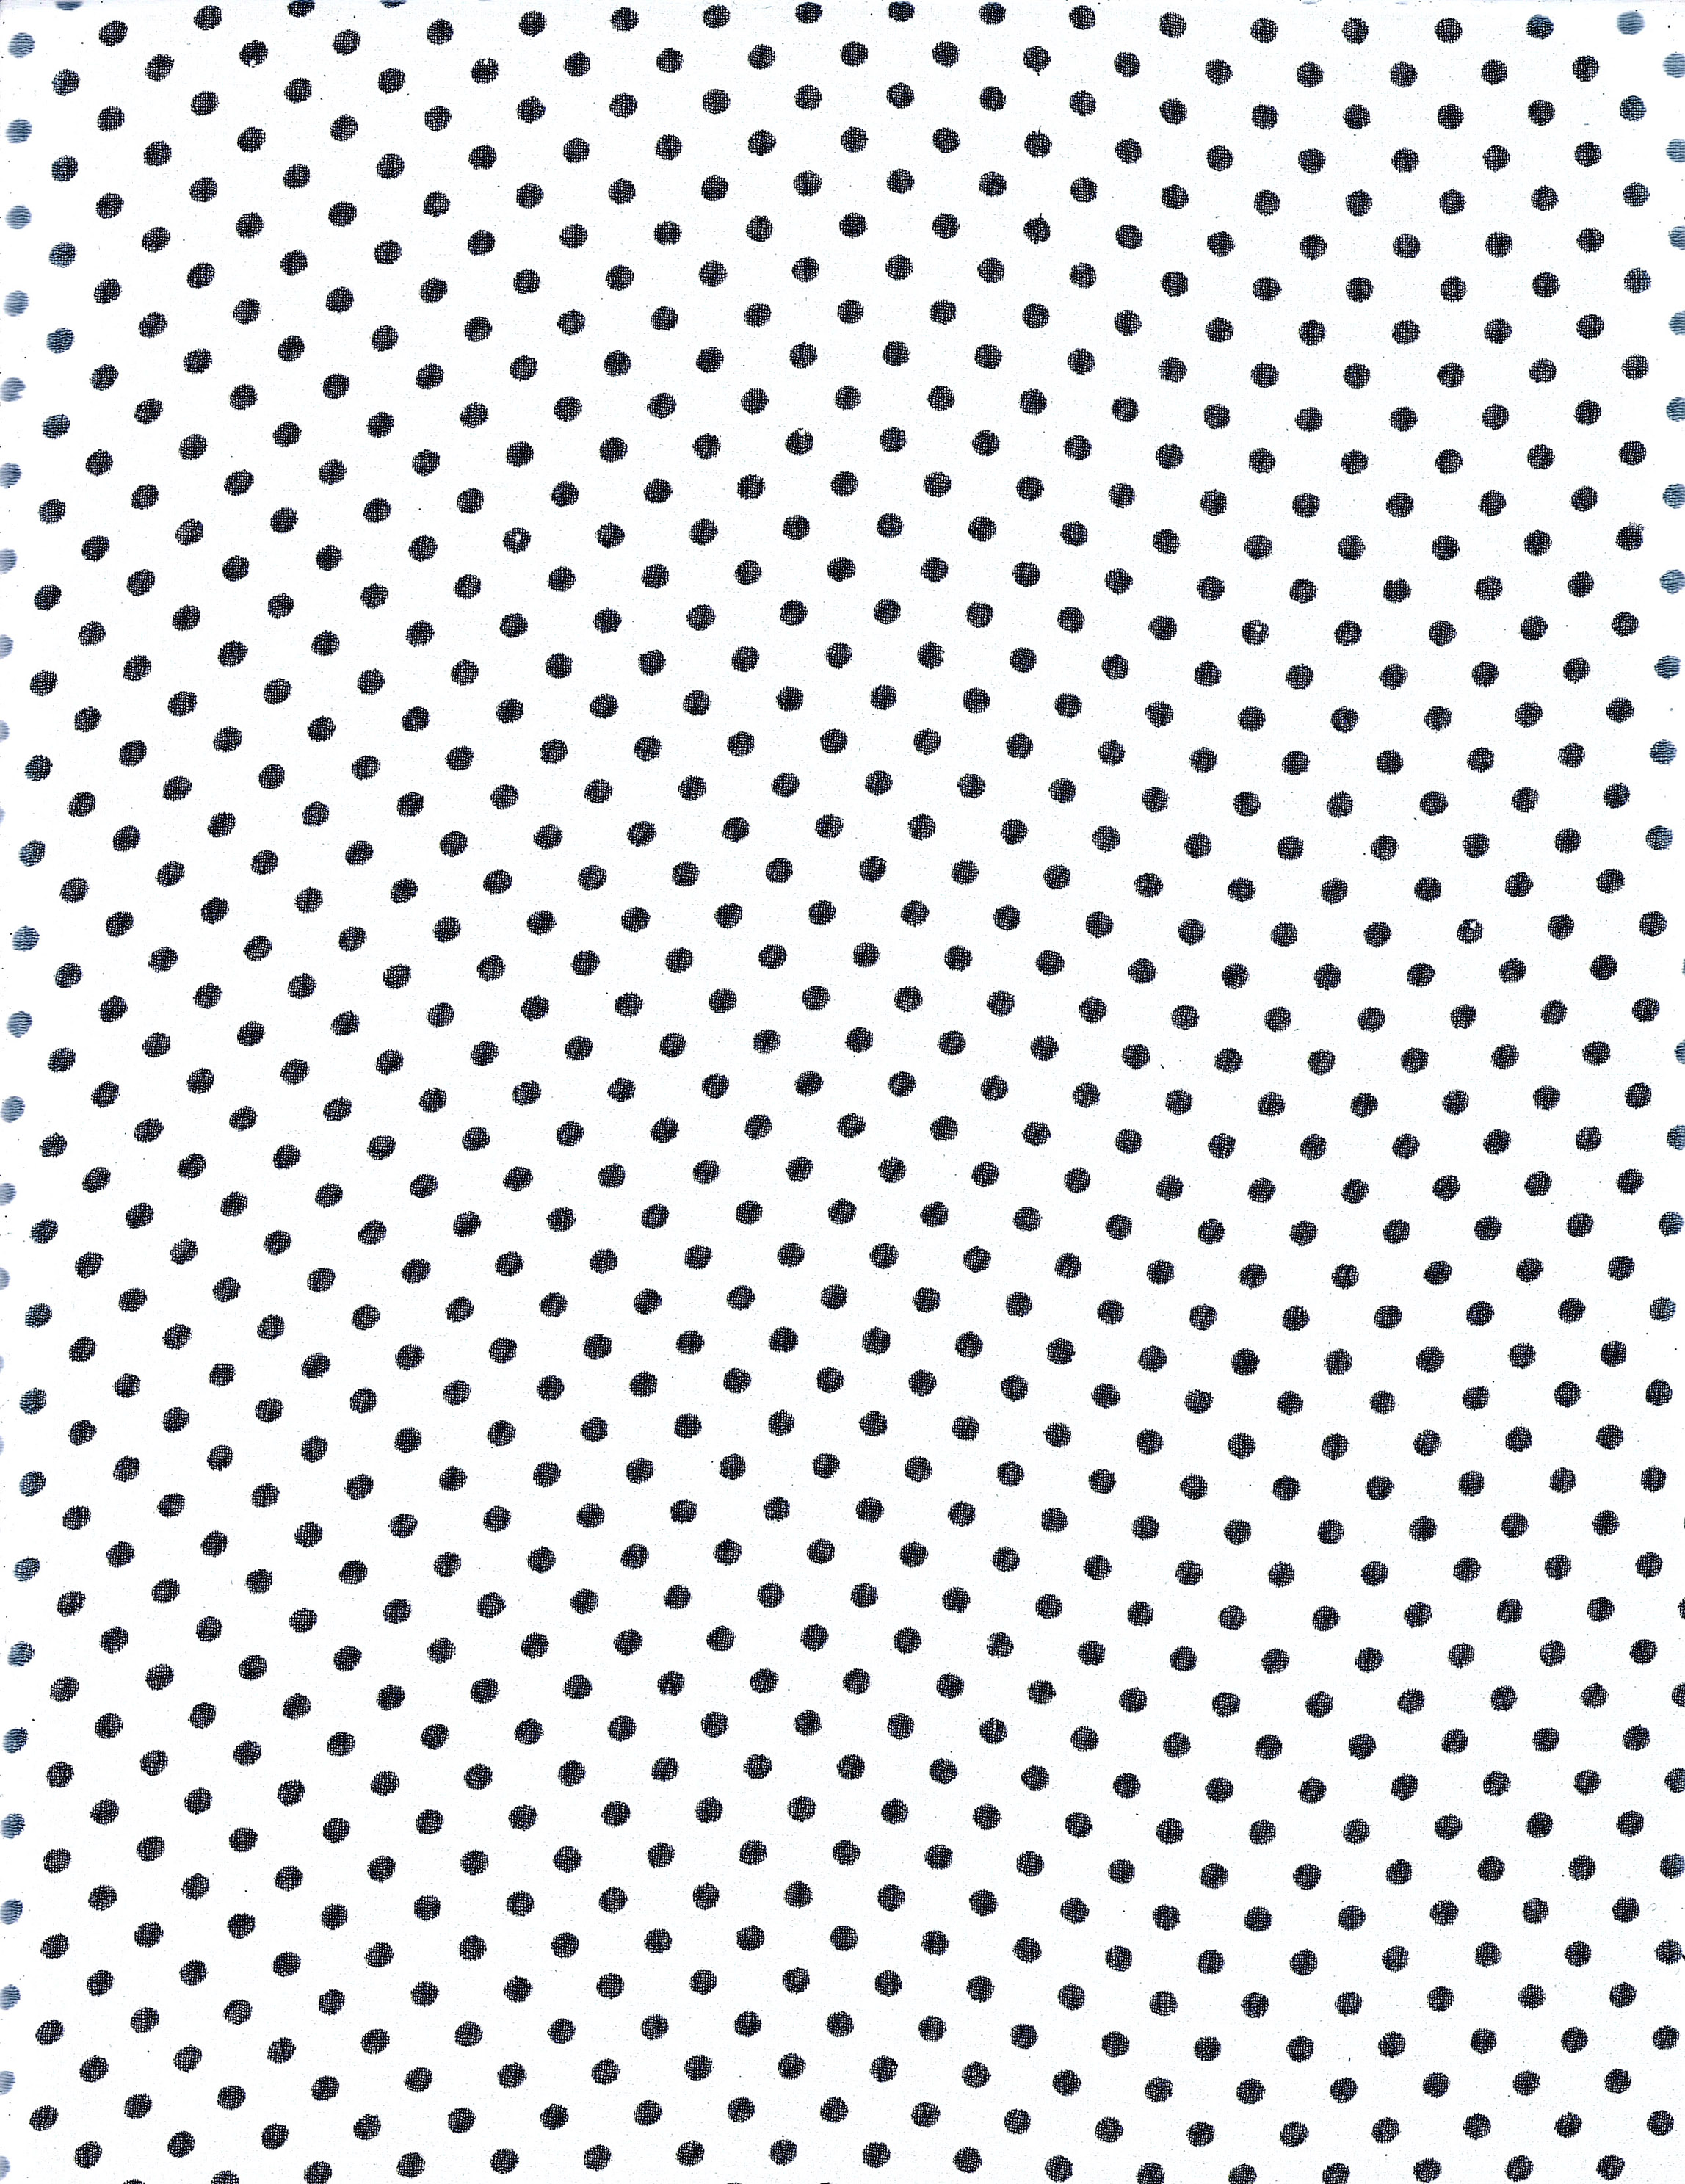 Free download FileWhite polka dots on red backgroundjpg Wikimedia